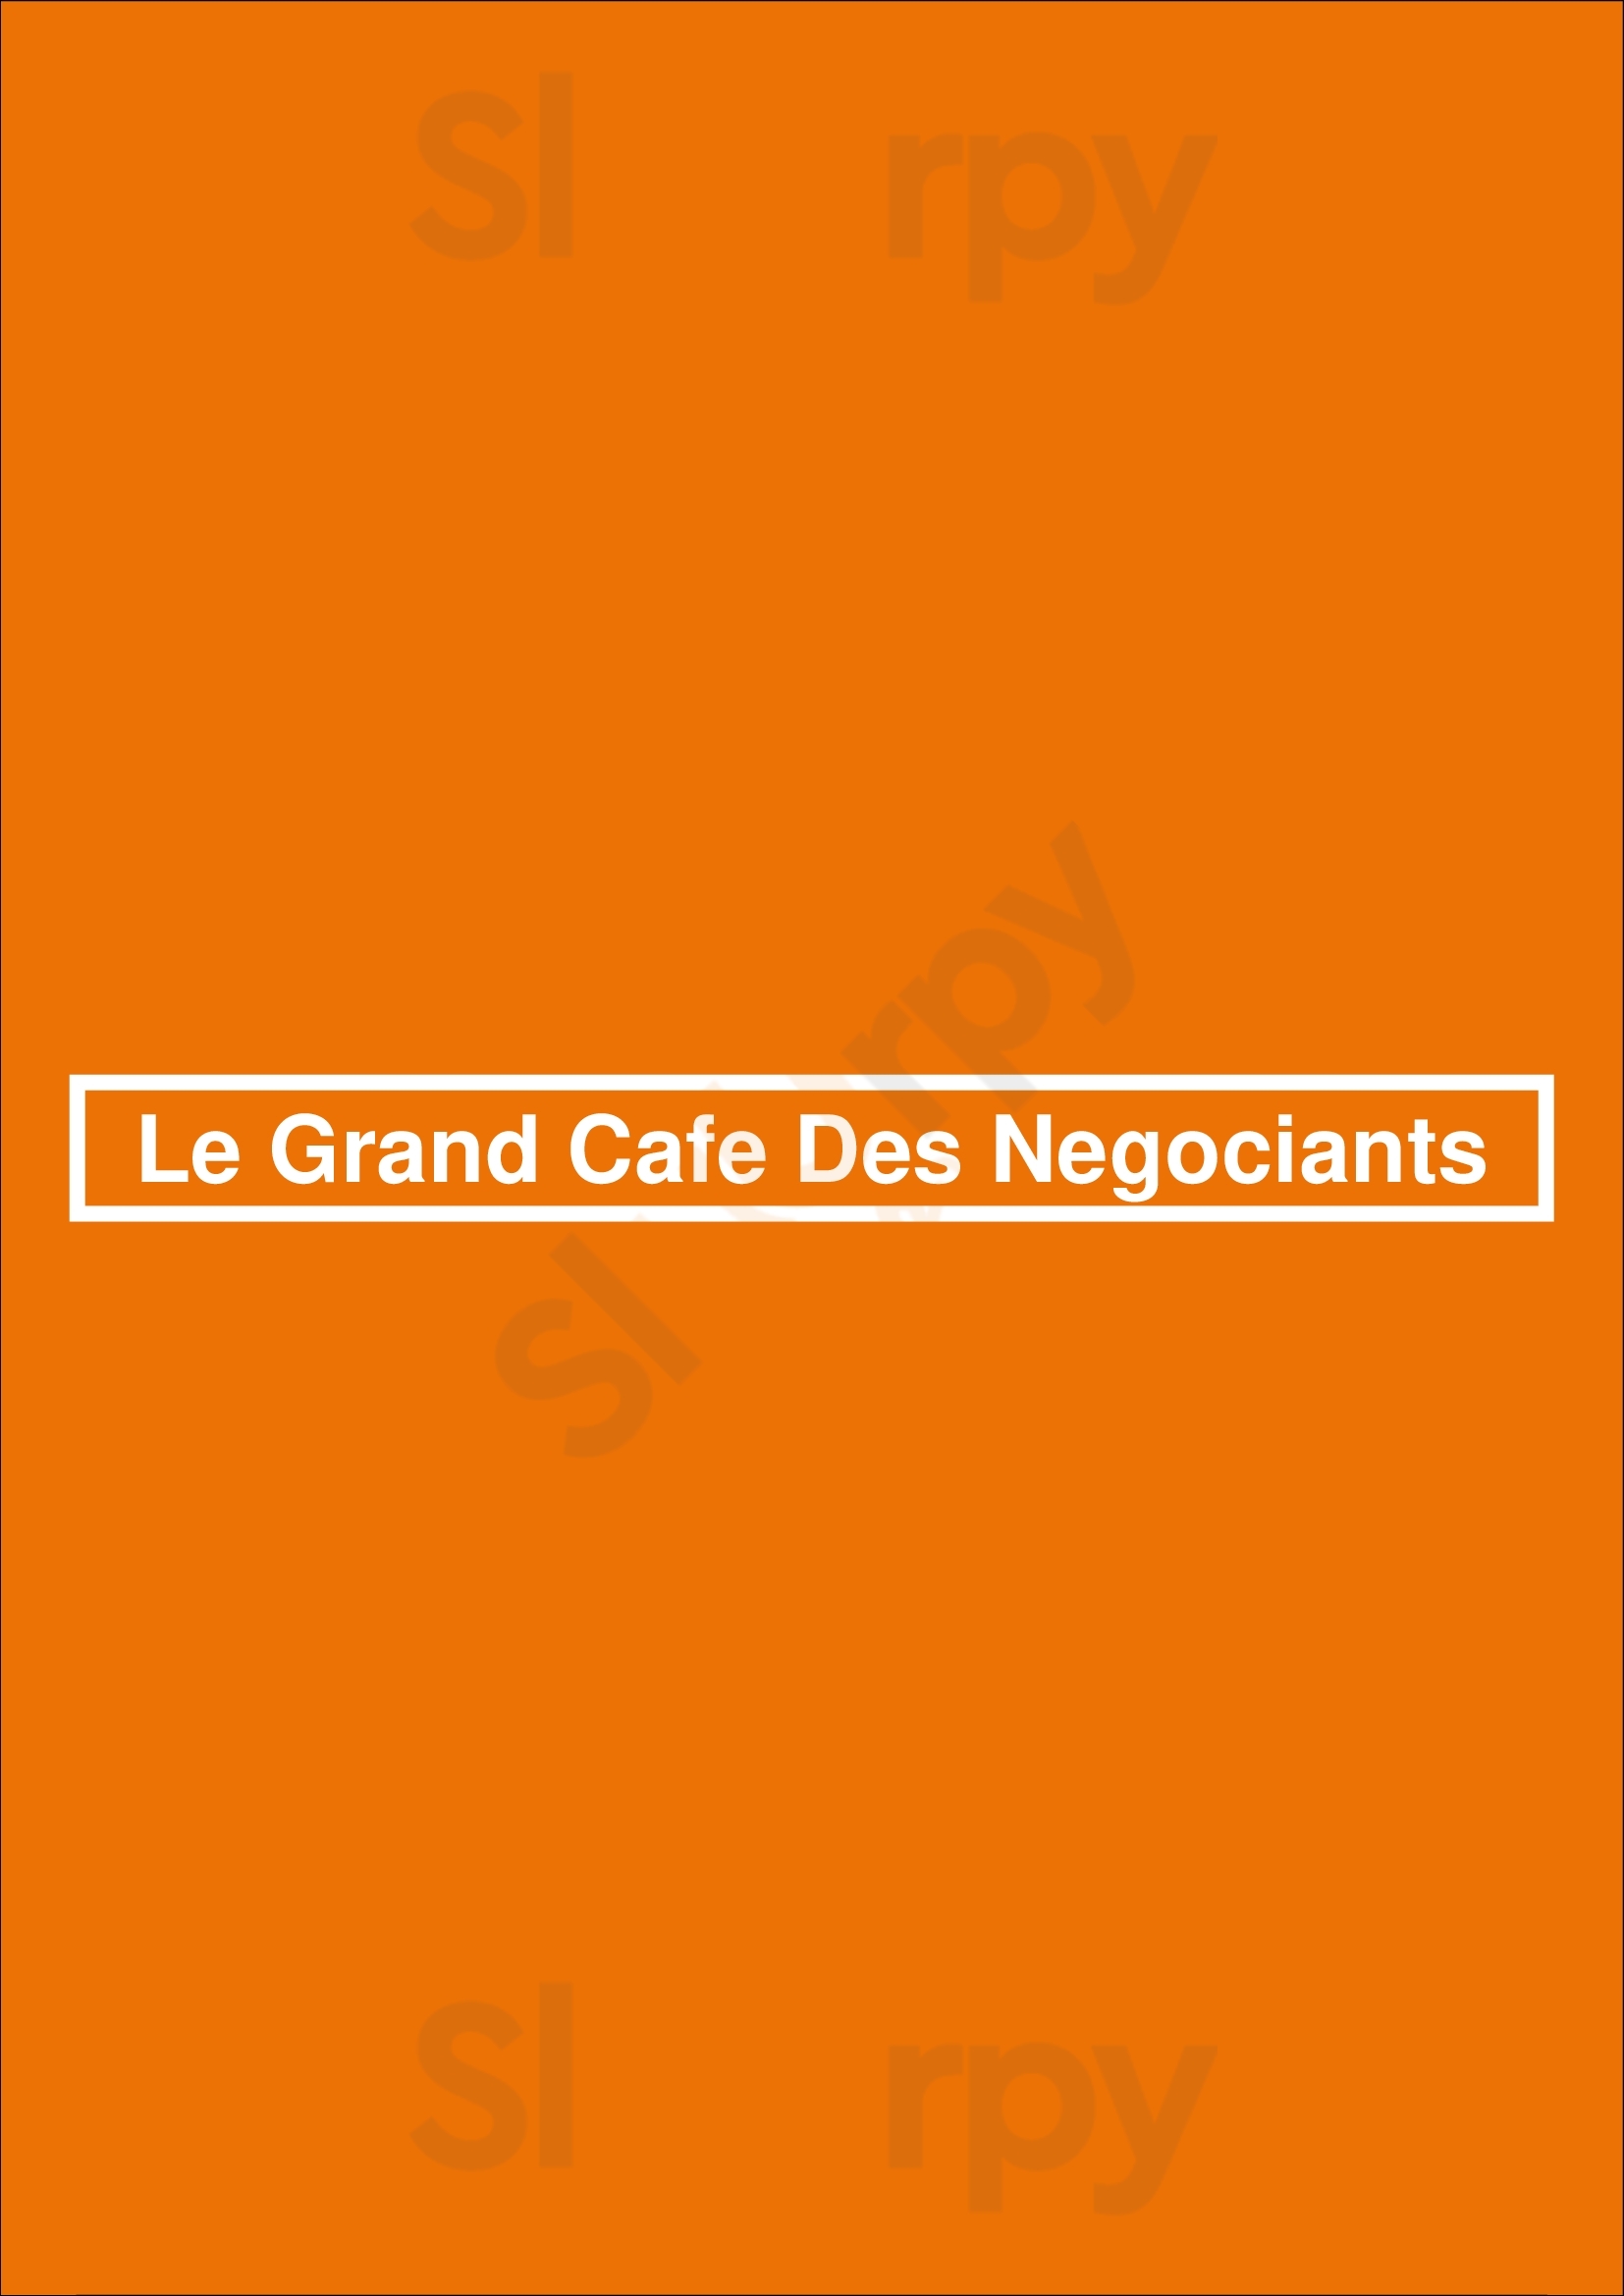 Le Grand Cafe Des Negociants Lyon Menu - 1